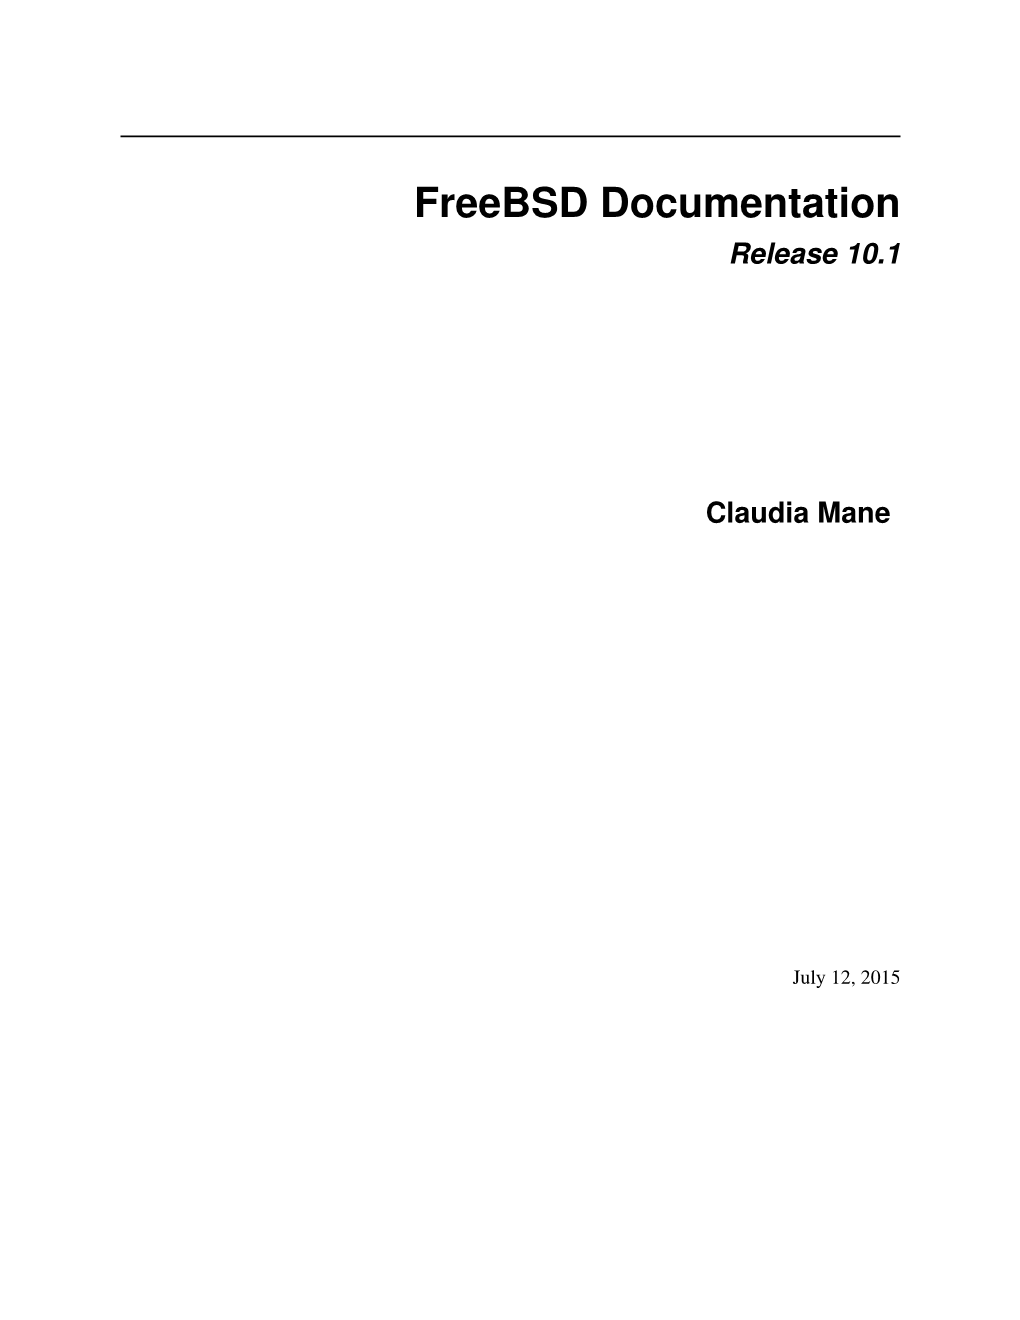 Freebsd Documentation Release 10.1